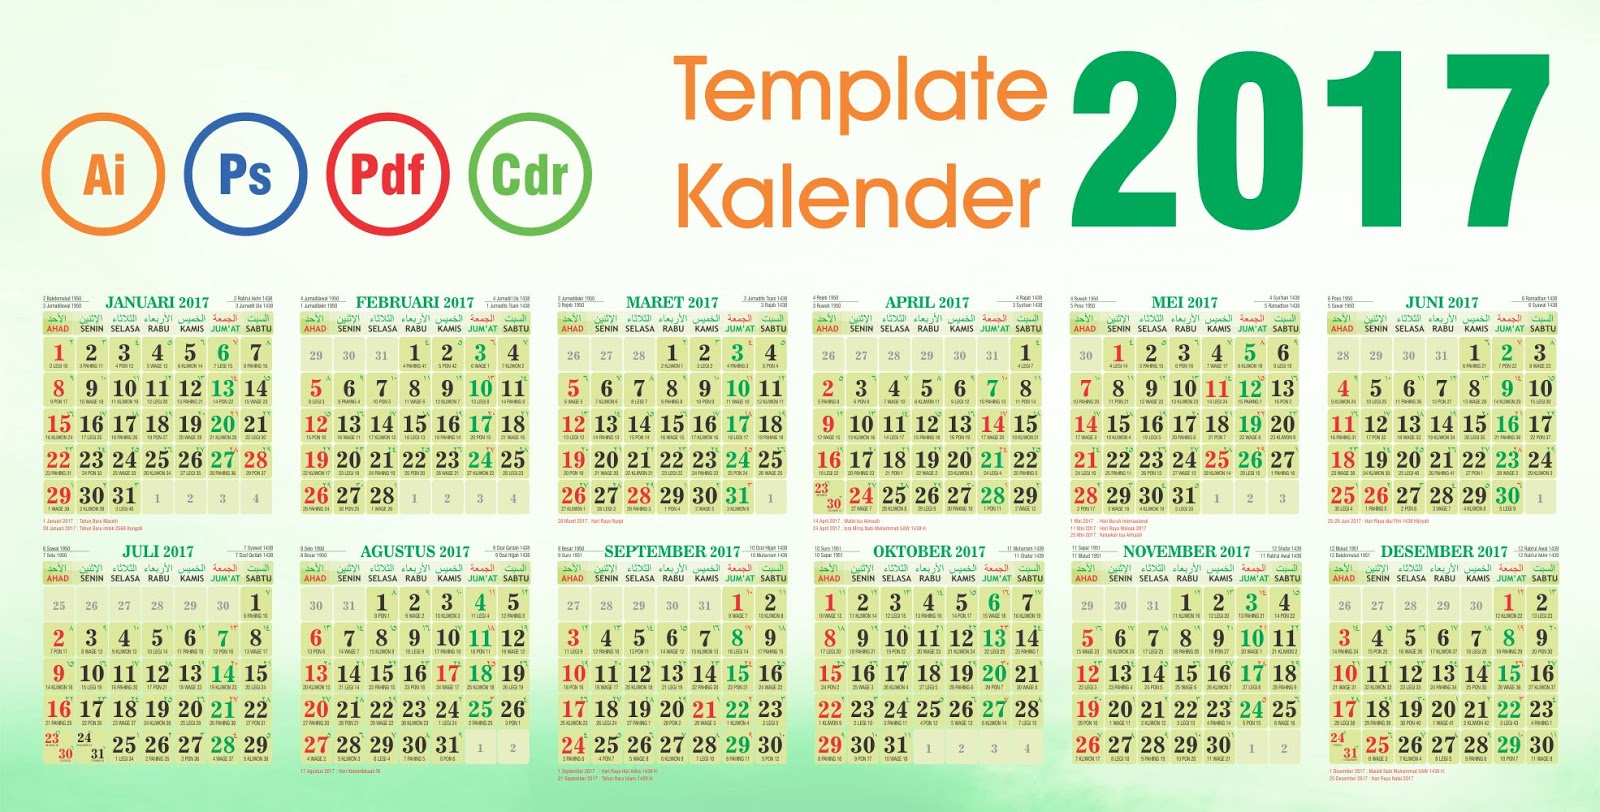 Template kalender 2017 Islami  Fadhil Design